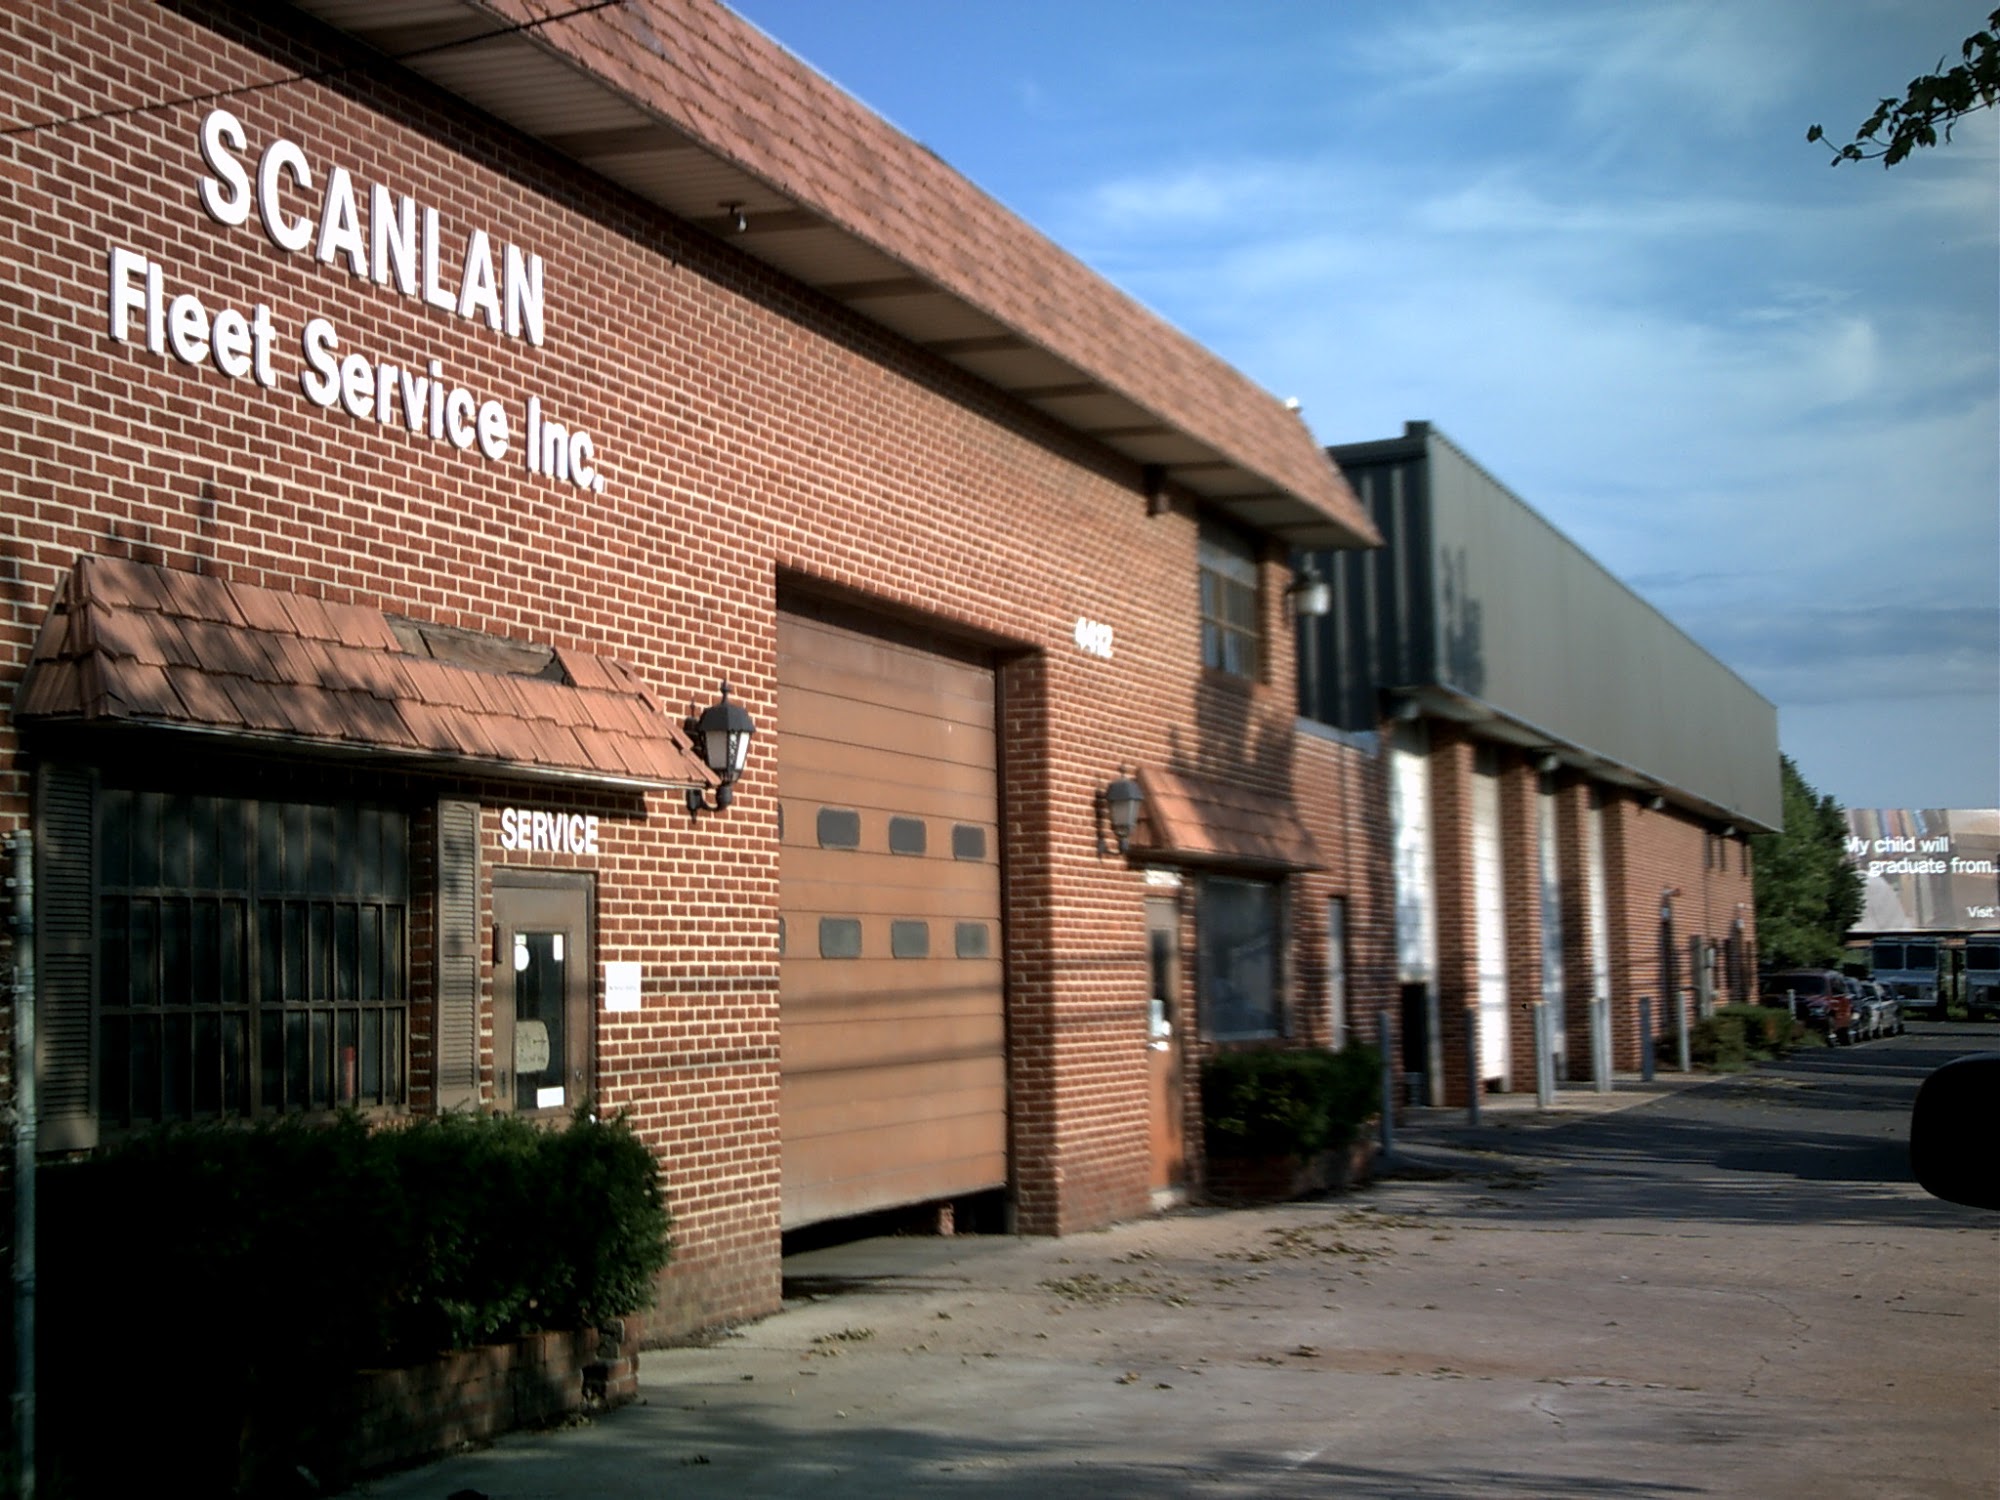 Scanlan Fleet Service, Inc.